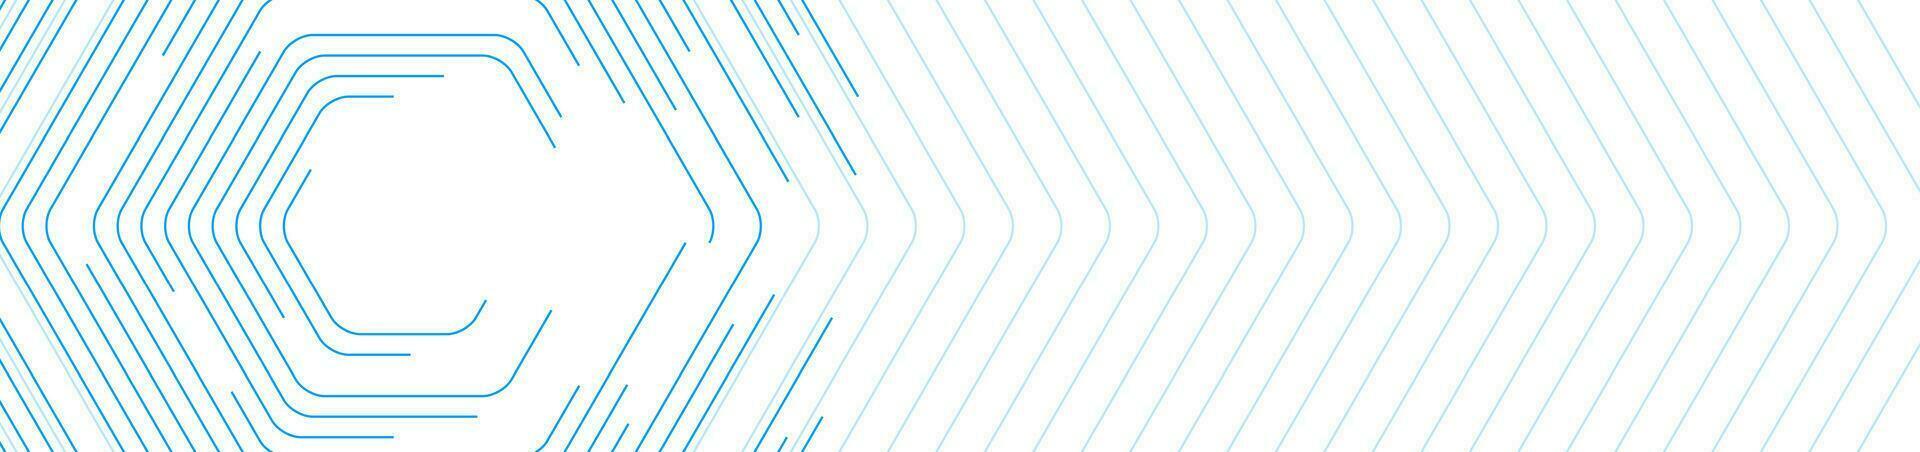 azul hexagonal líneas resumen futurista tecnología bandera vector